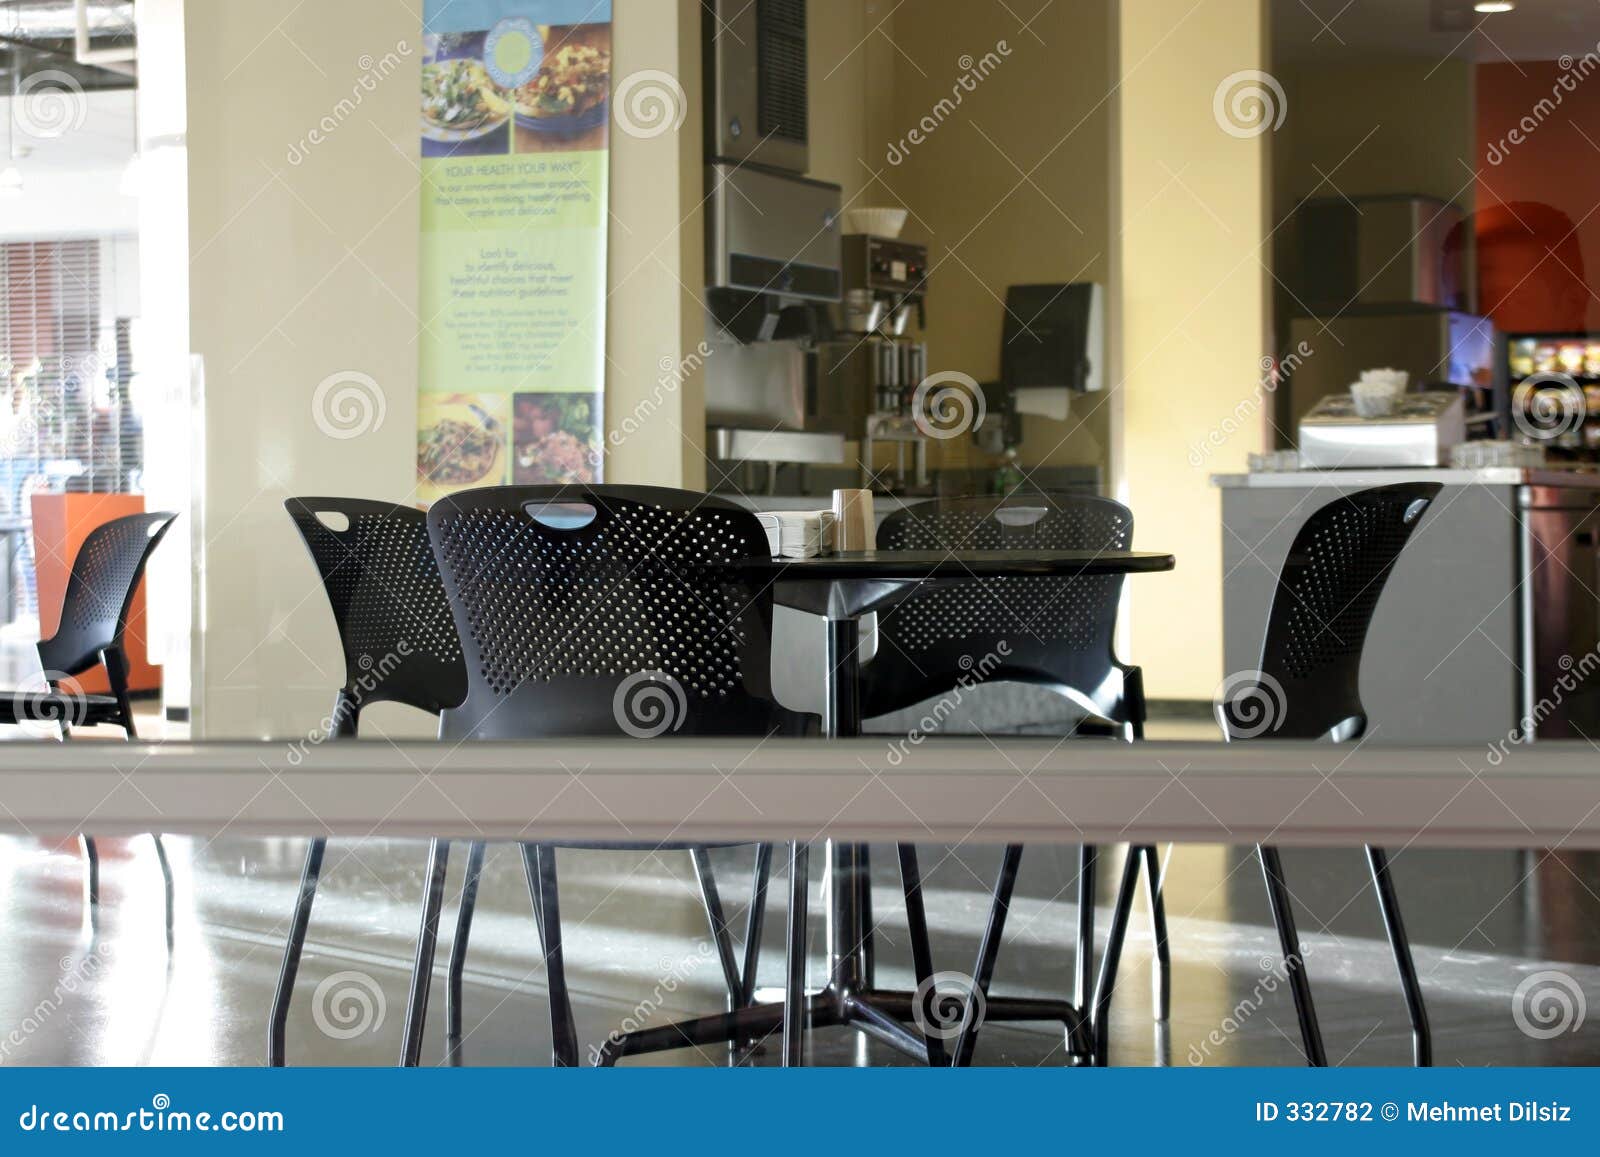 empty cafeteria